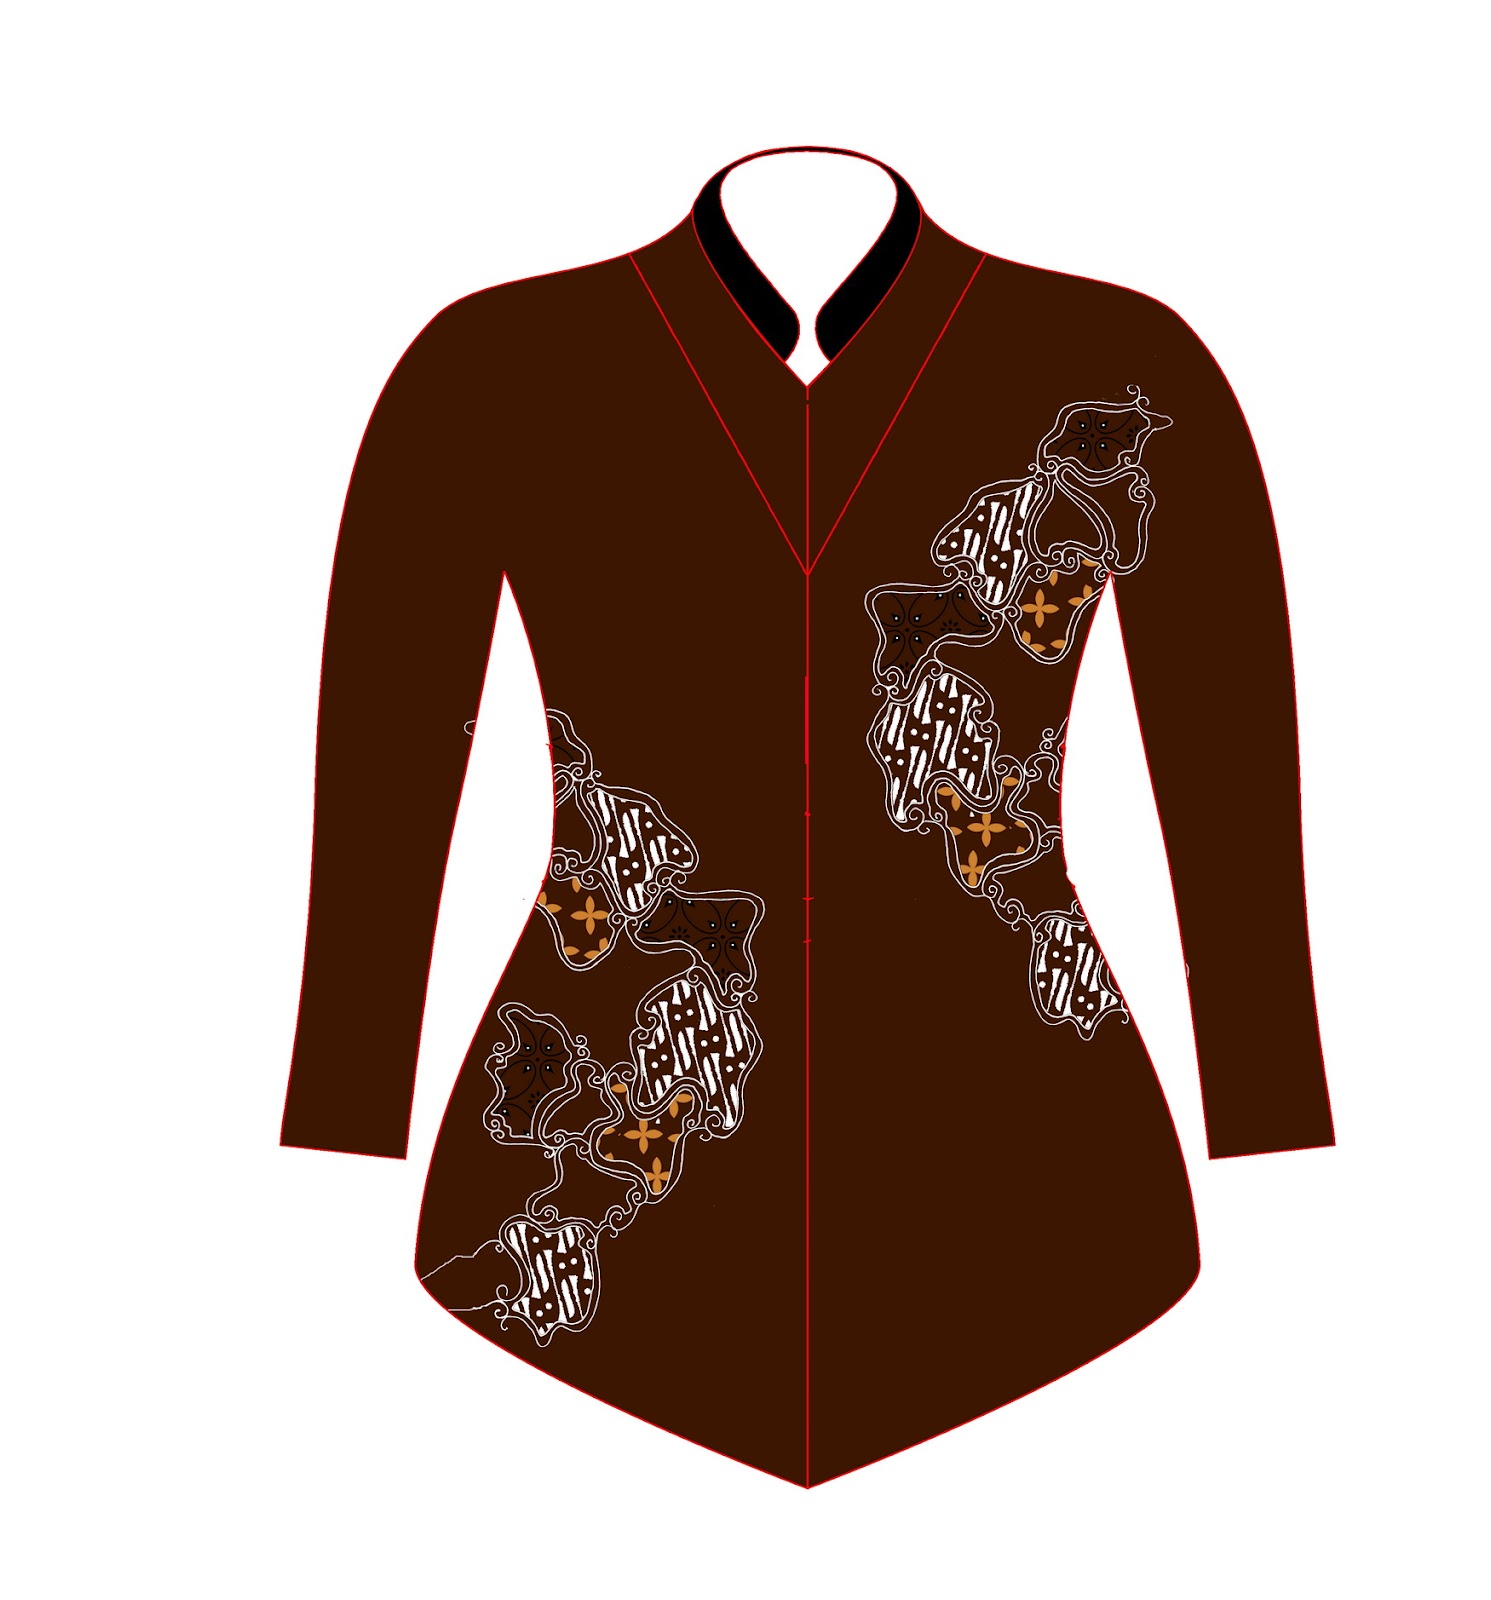 Download Desain Baju Batik Corel Draw - tweetsfasr